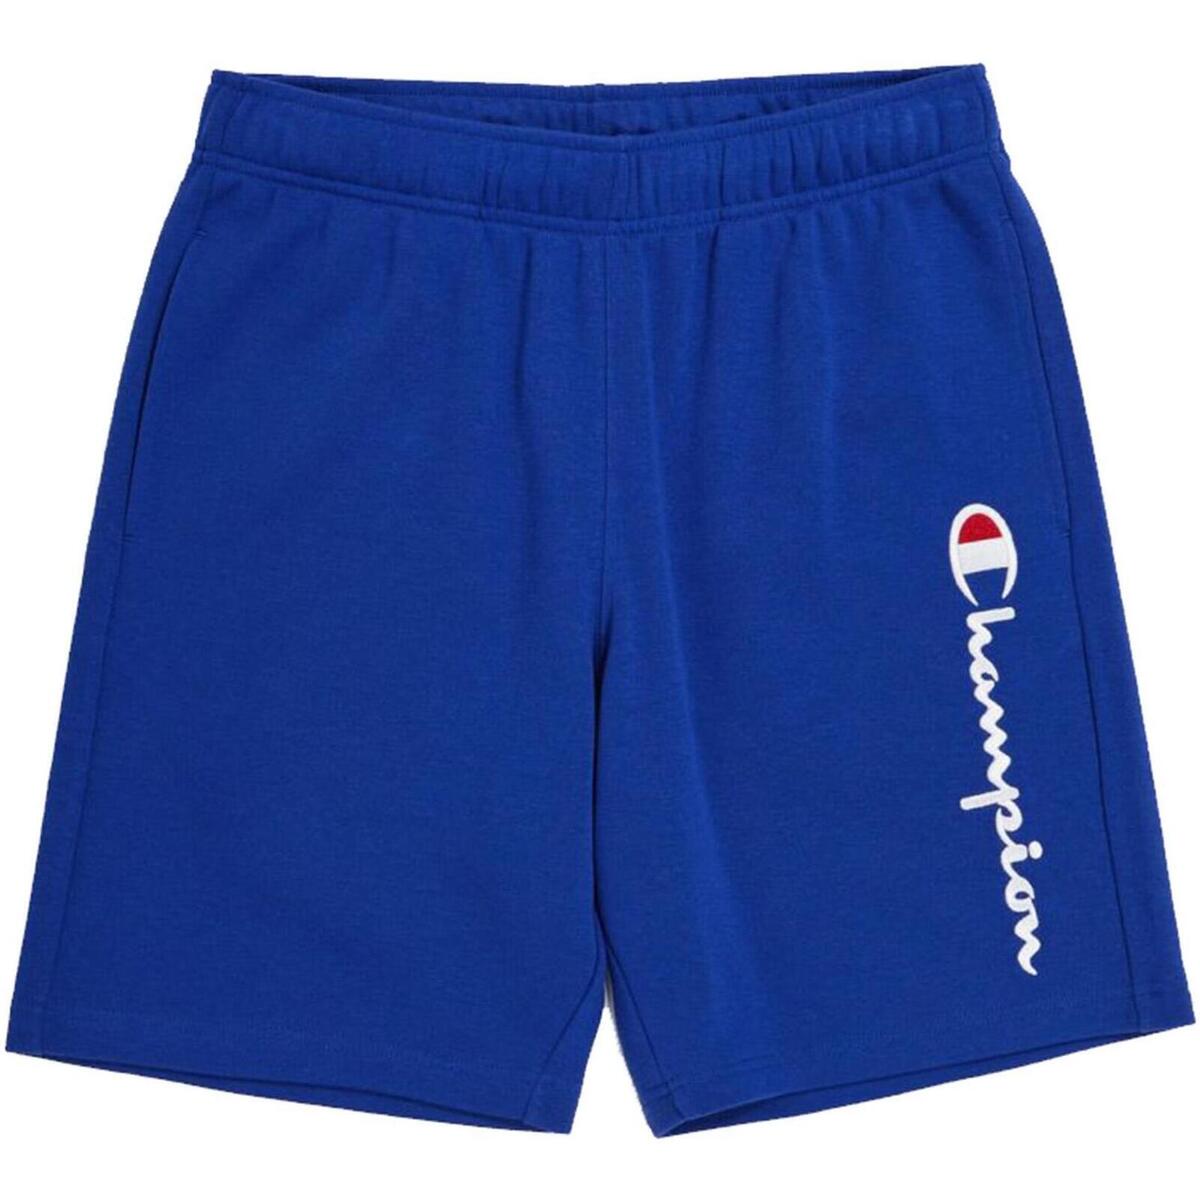 Vêtements Homme Shorts / Bermudas Champion Bermuda Bleu